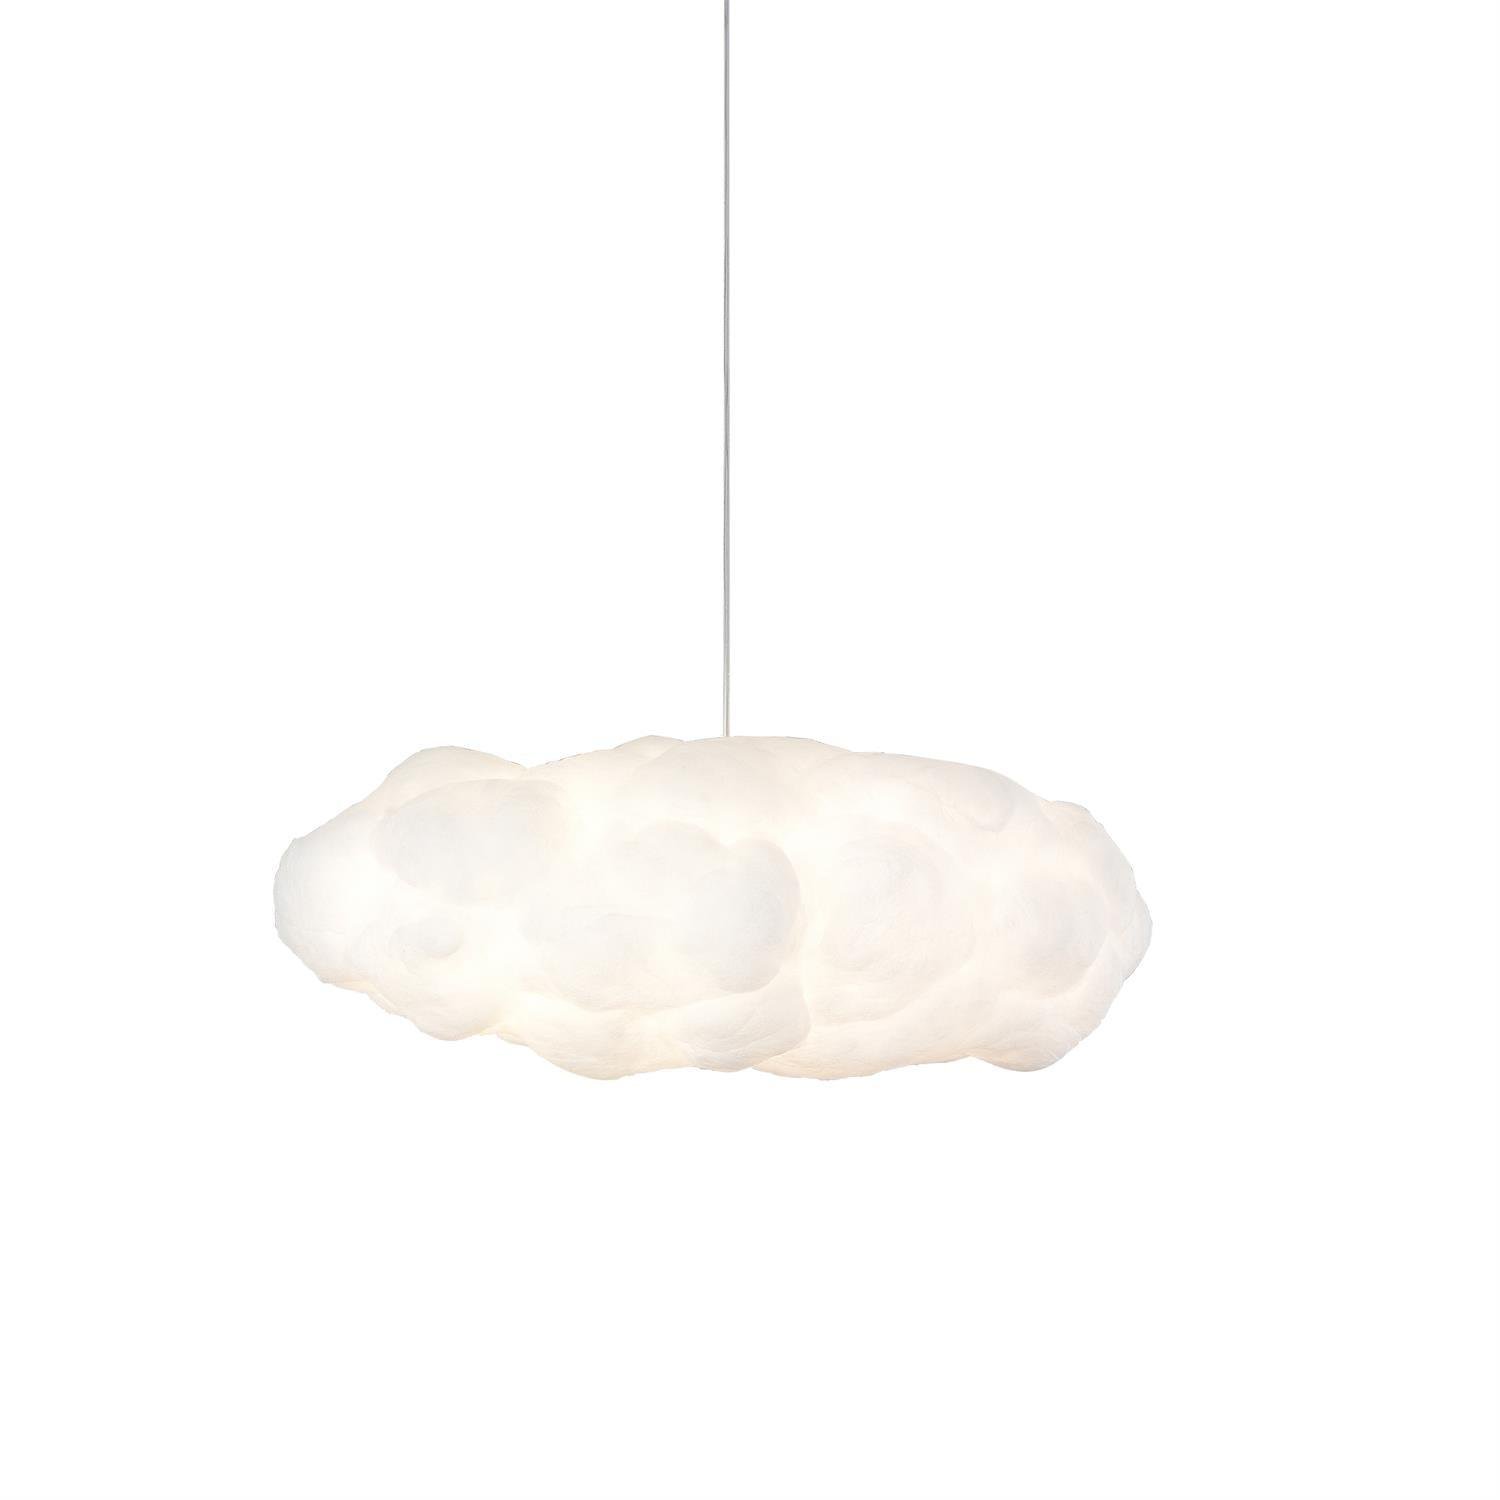 Cloudy Pendant Light ∅ 15.7″ x H 9.8″ , Dia 40cm x H 25cm , White